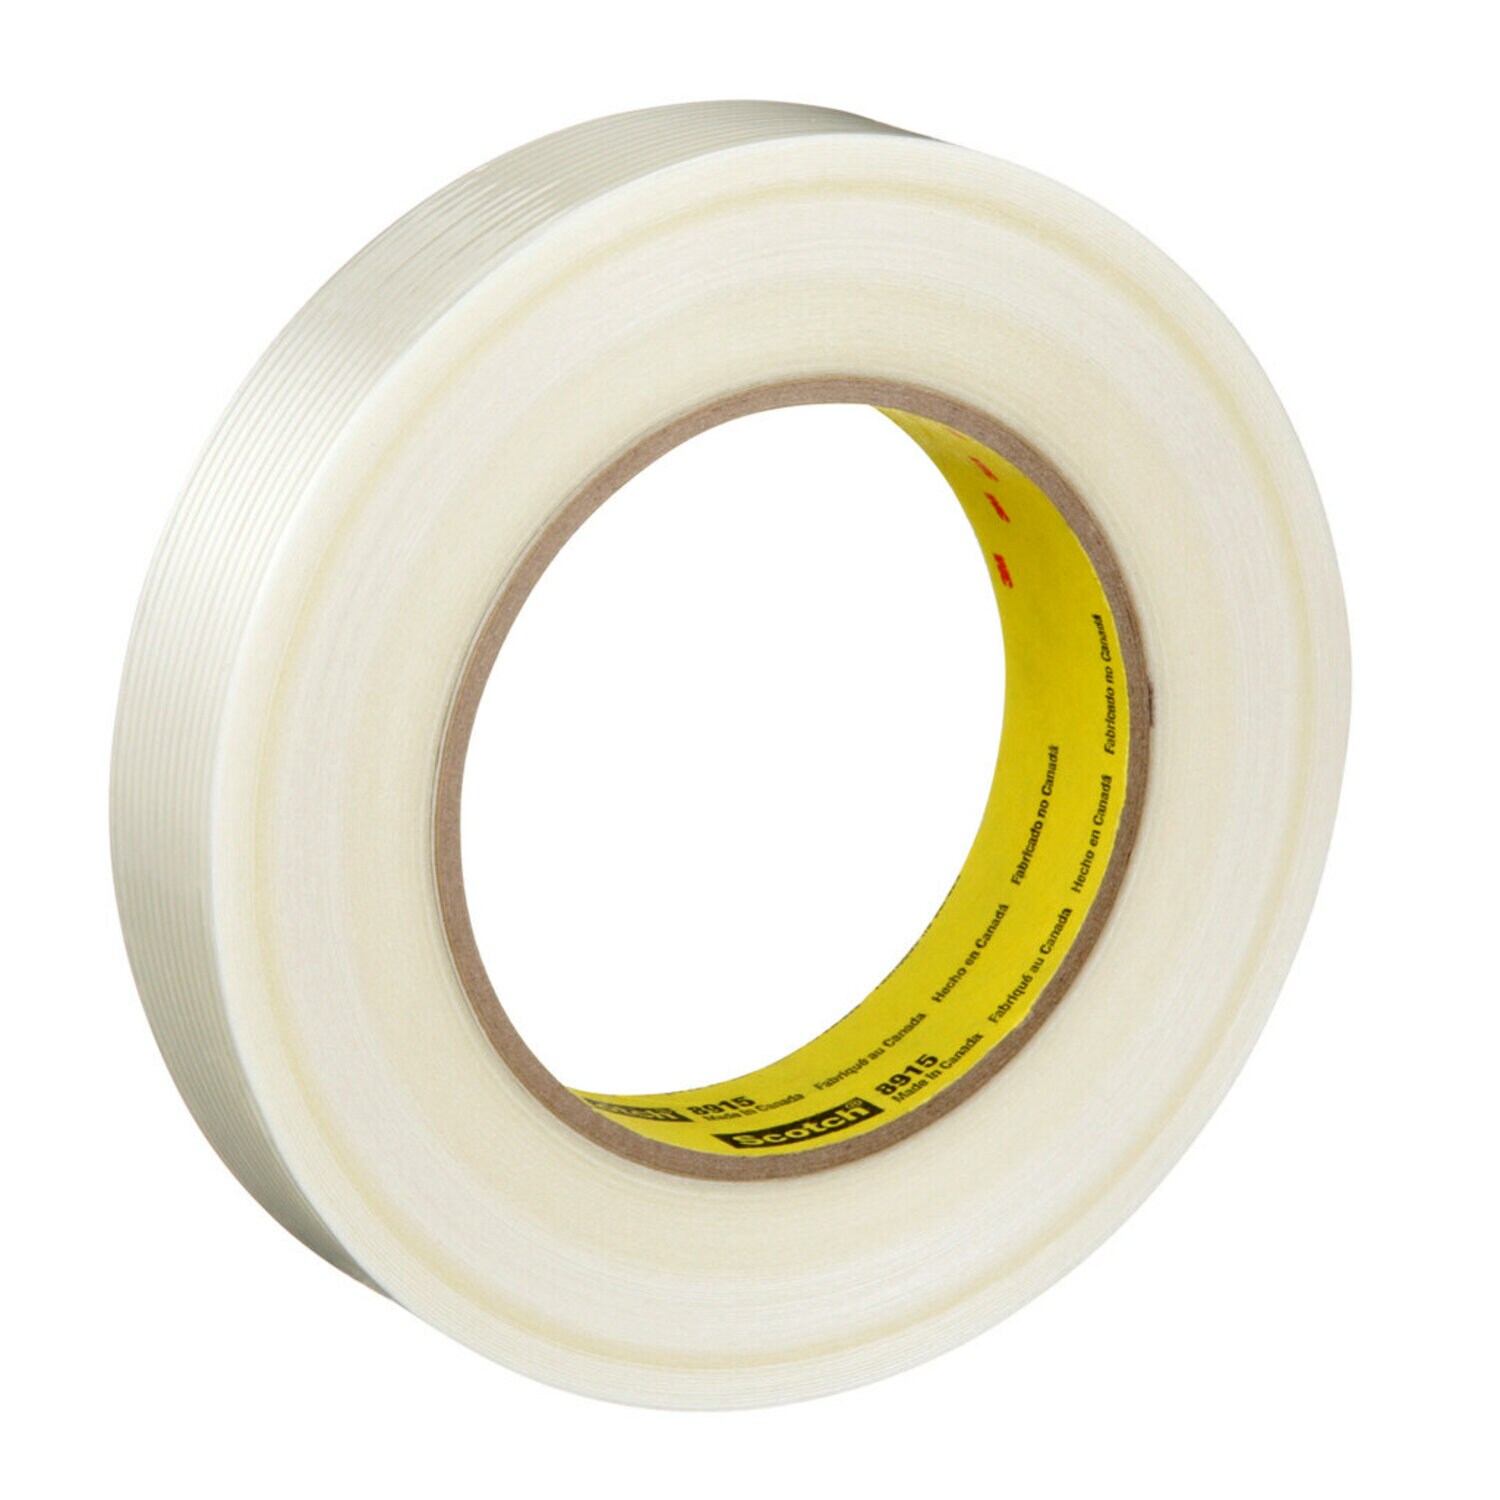 7000048604 - Scotch Filament Tape 8915, Clean Removal, 12 mm x 55 m, 6 mil, 72
Rolls/Case